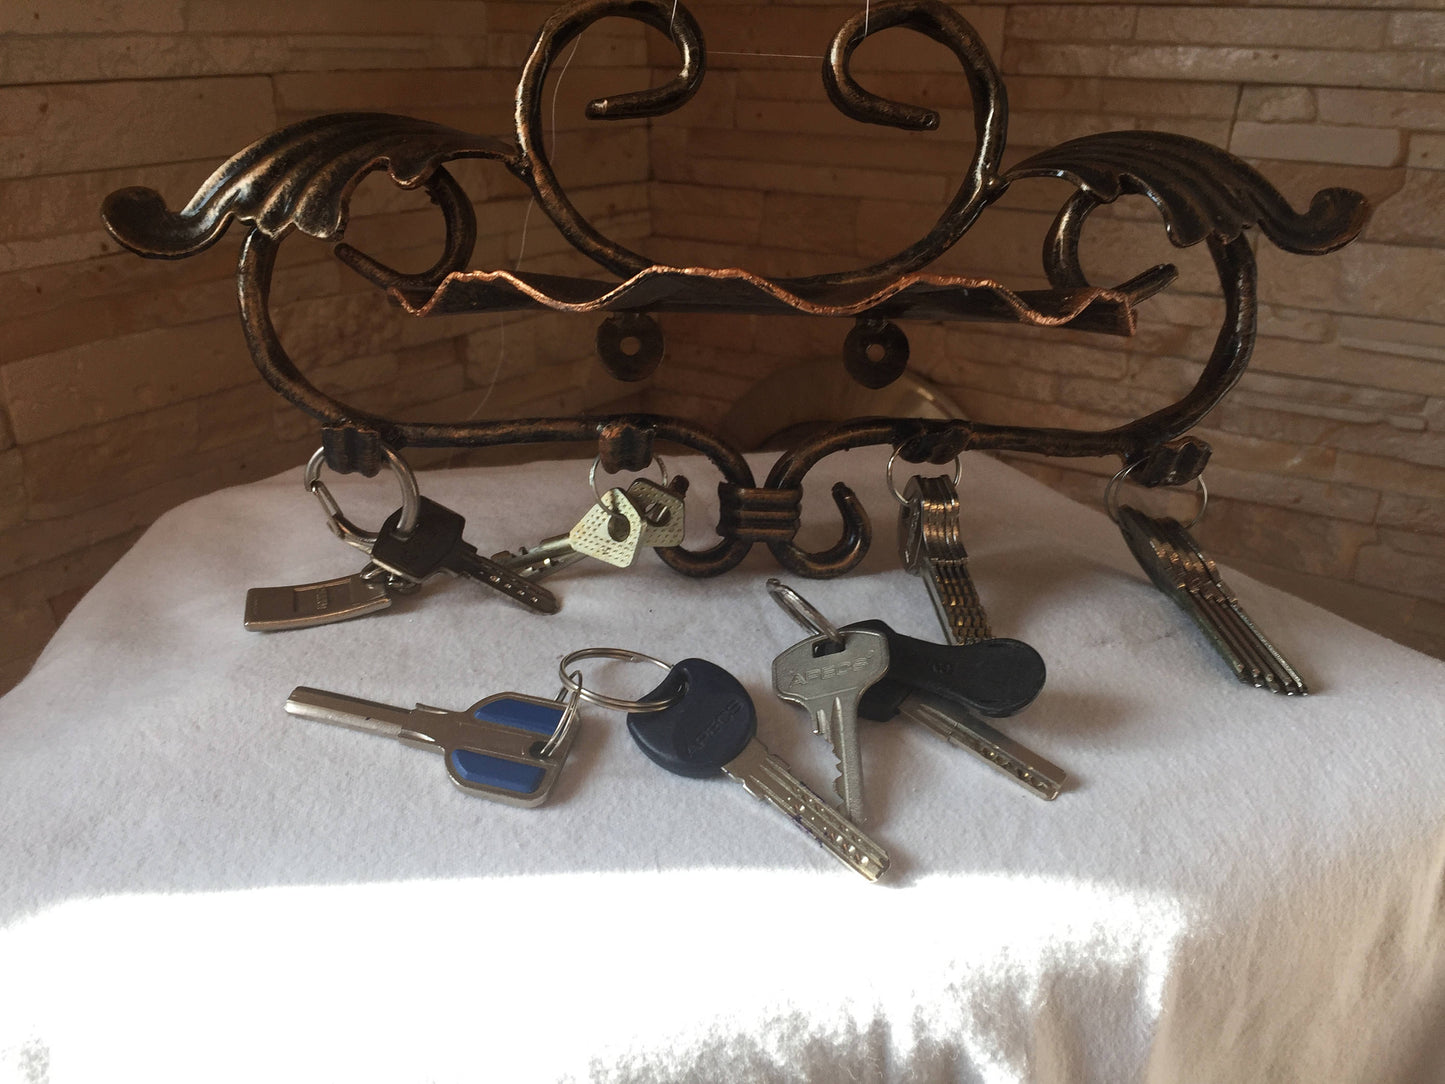 Key holder for wall, metal key hanger, wall key holder, key hook rack, key holder with shelf, key organizer, key case, key stand, forged key